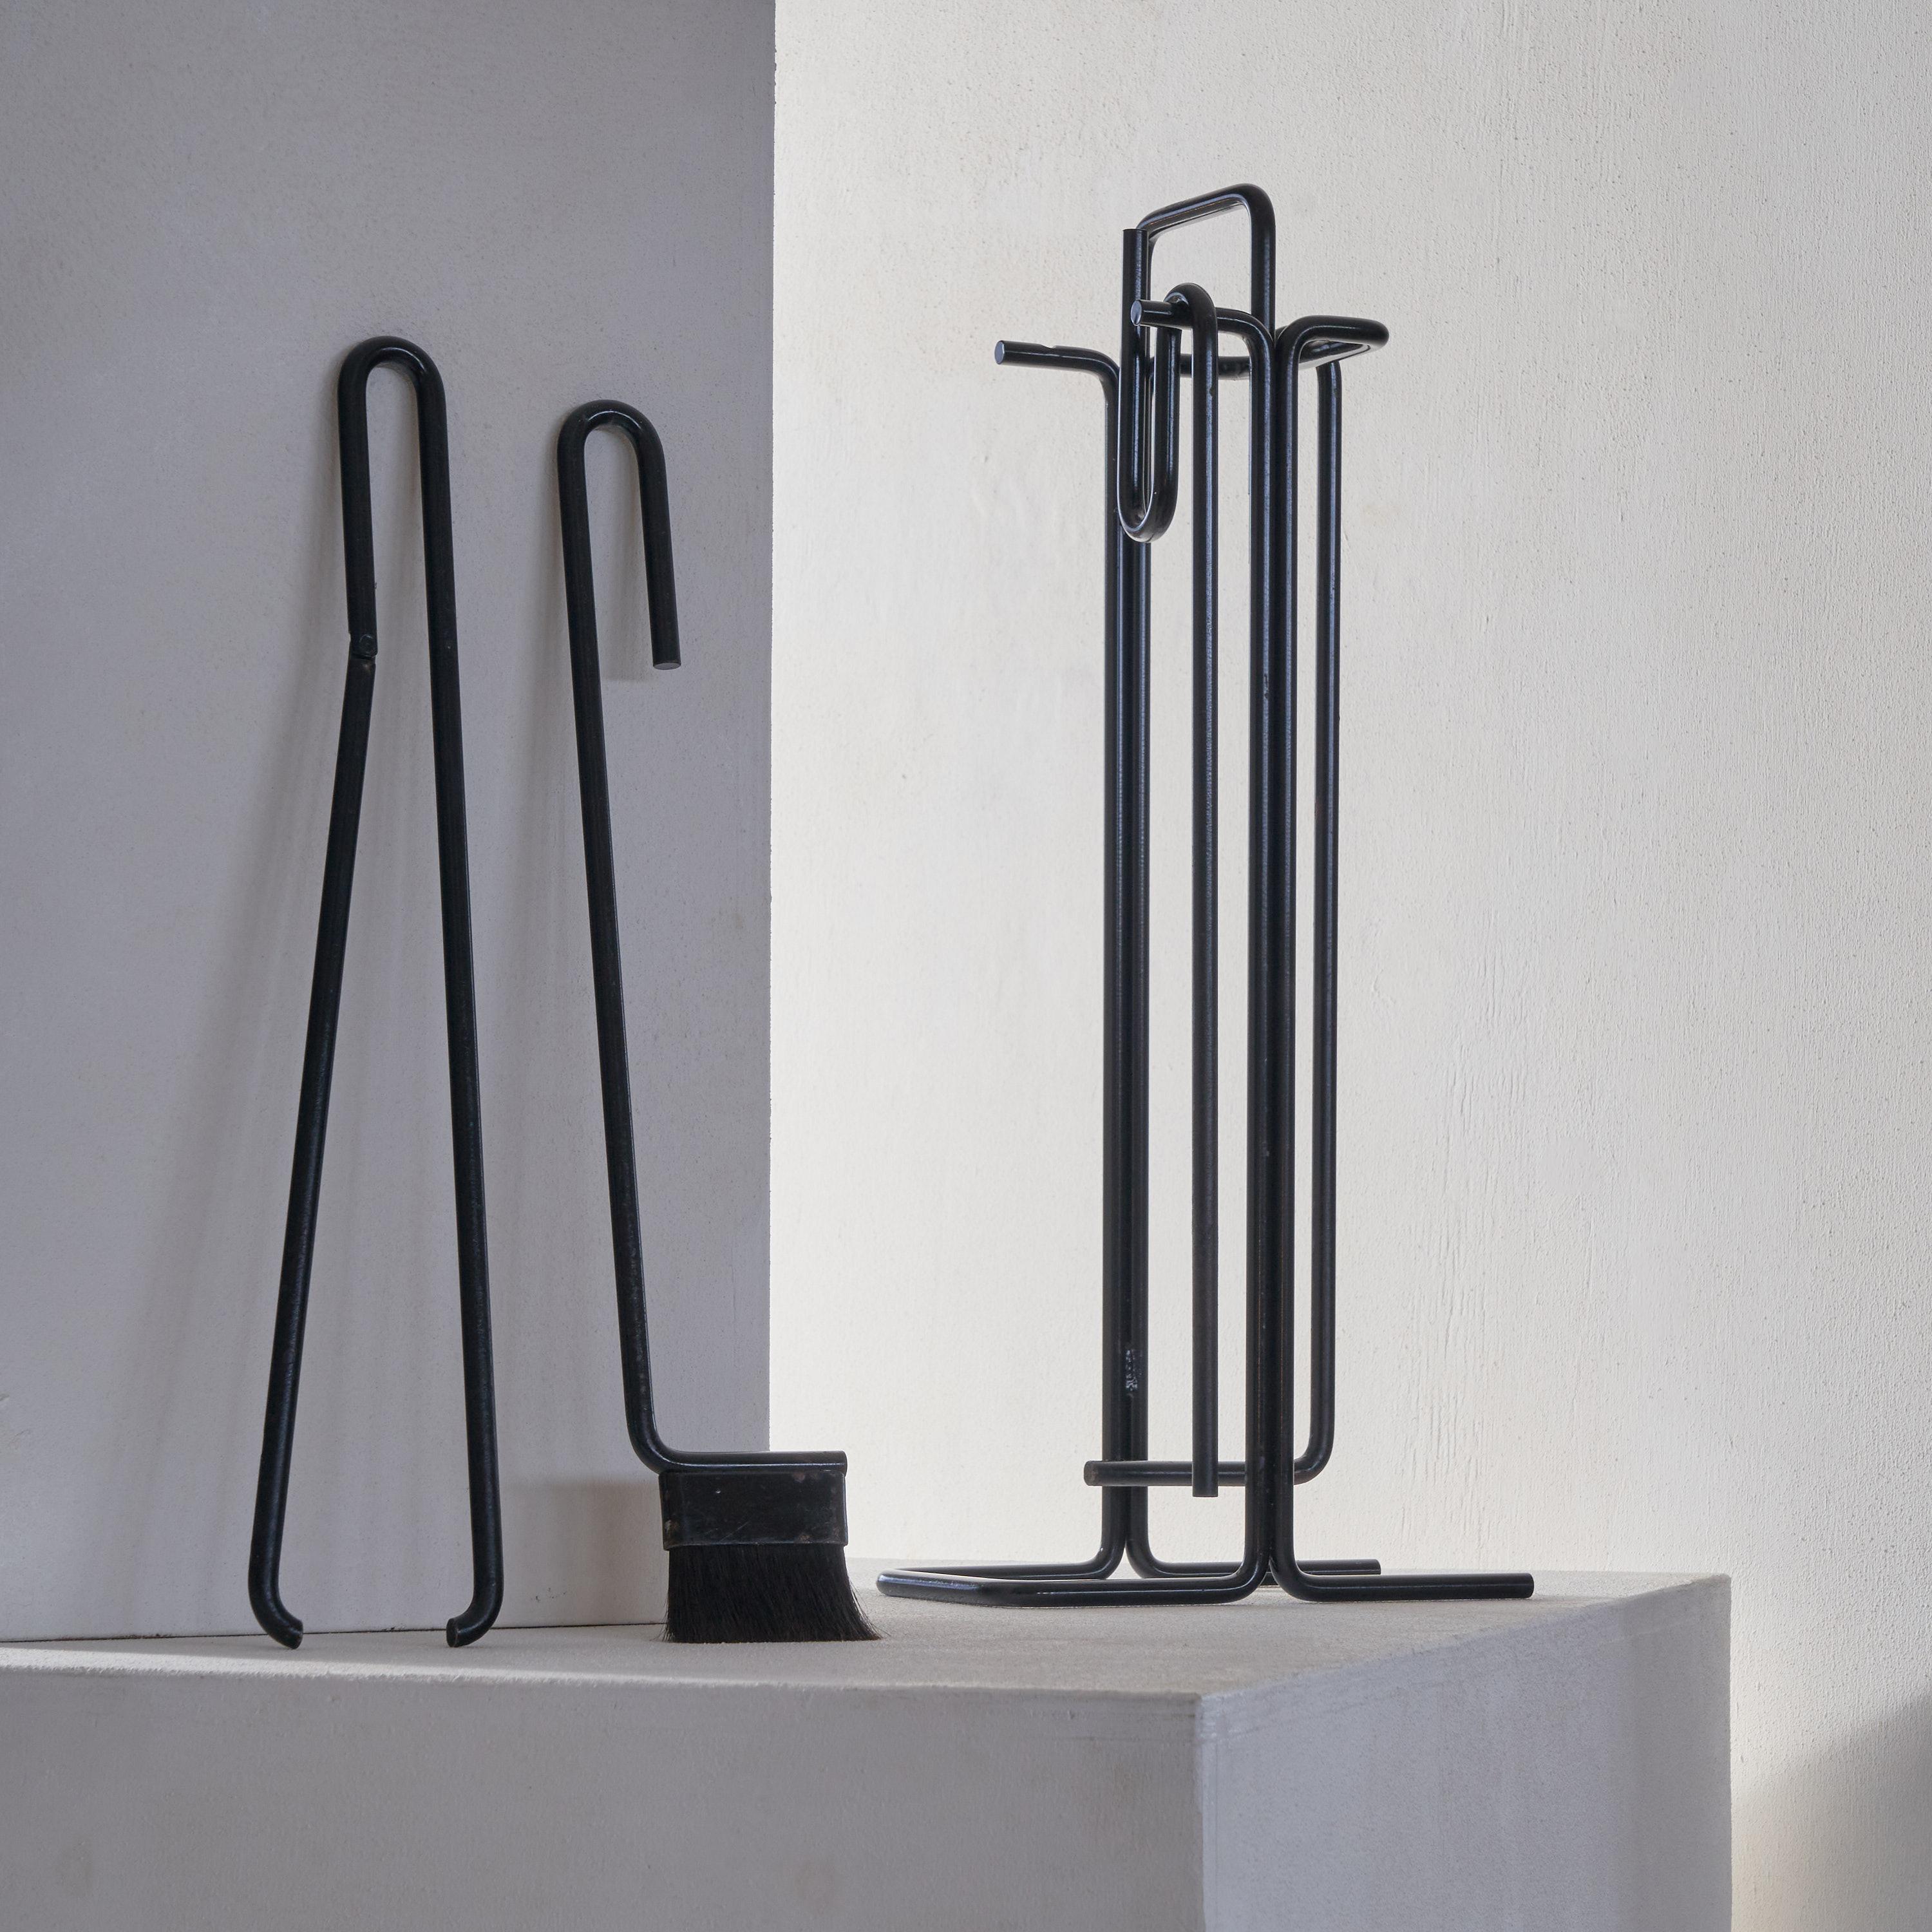 Belgian Ann Maes Set of Modernist Fireplace Tools & Literature Holder For Sale